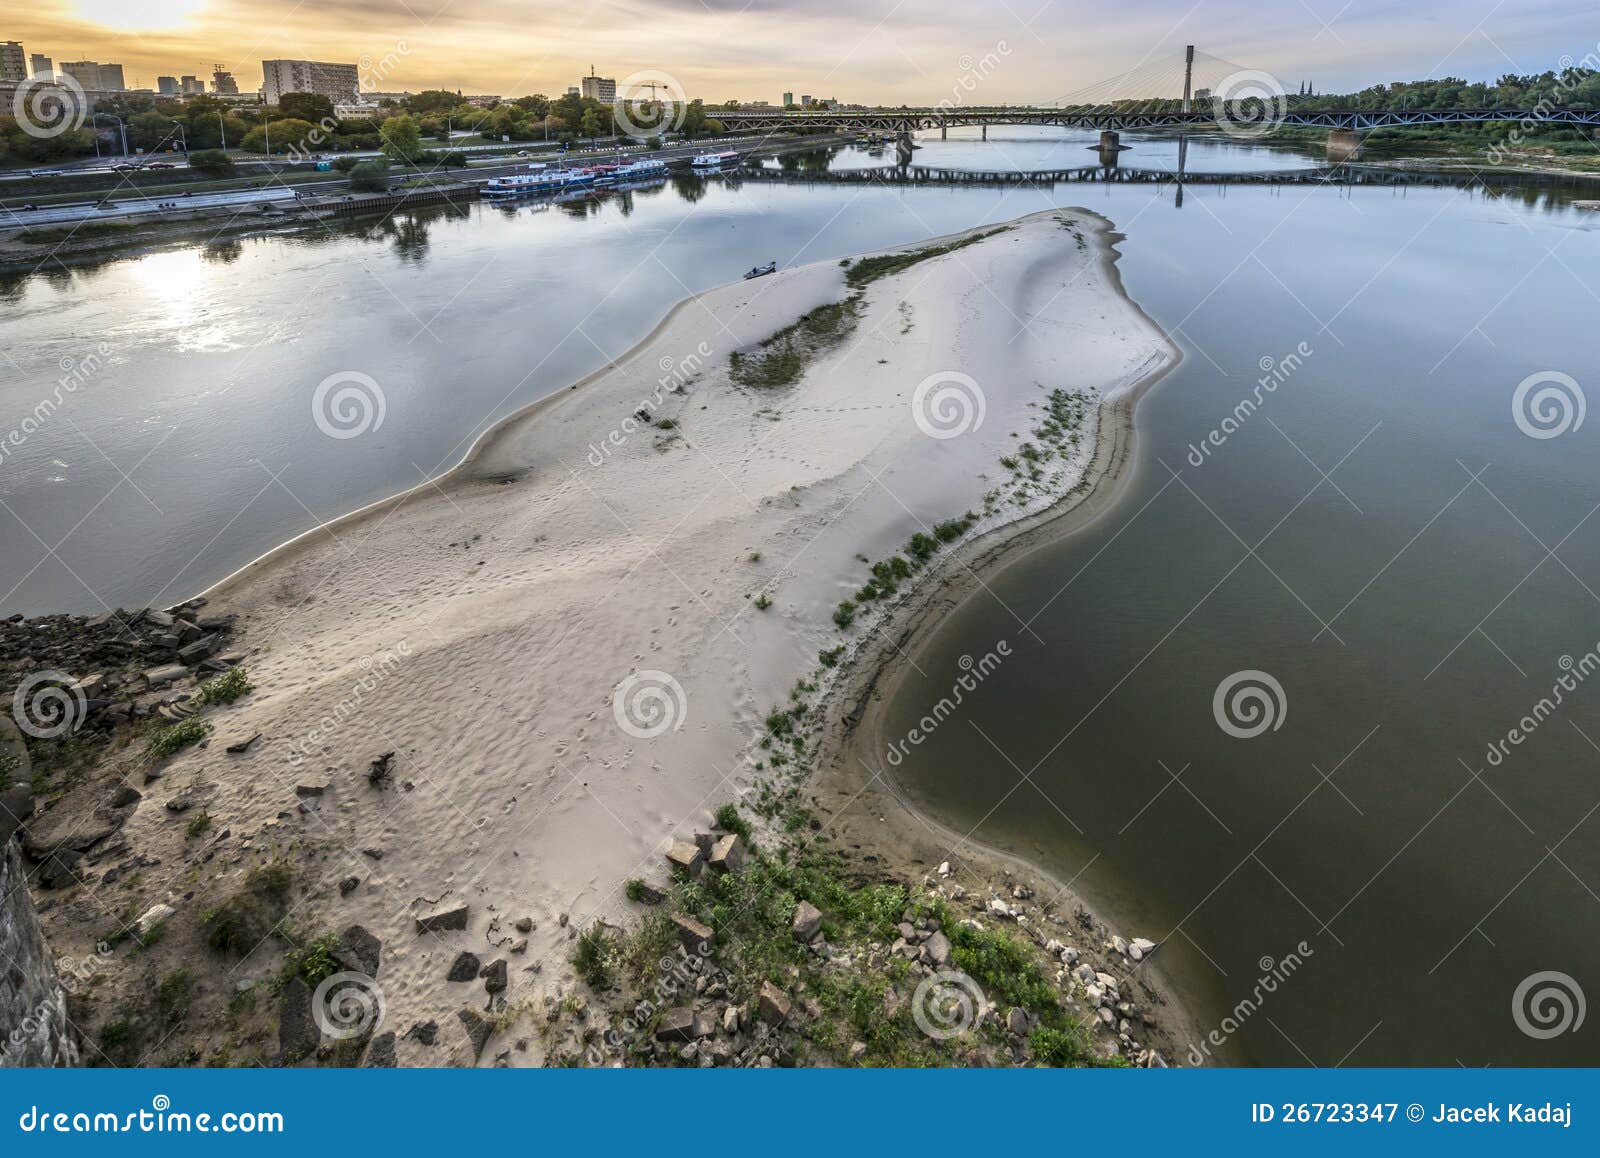 dry vistula river in warsaw, poland